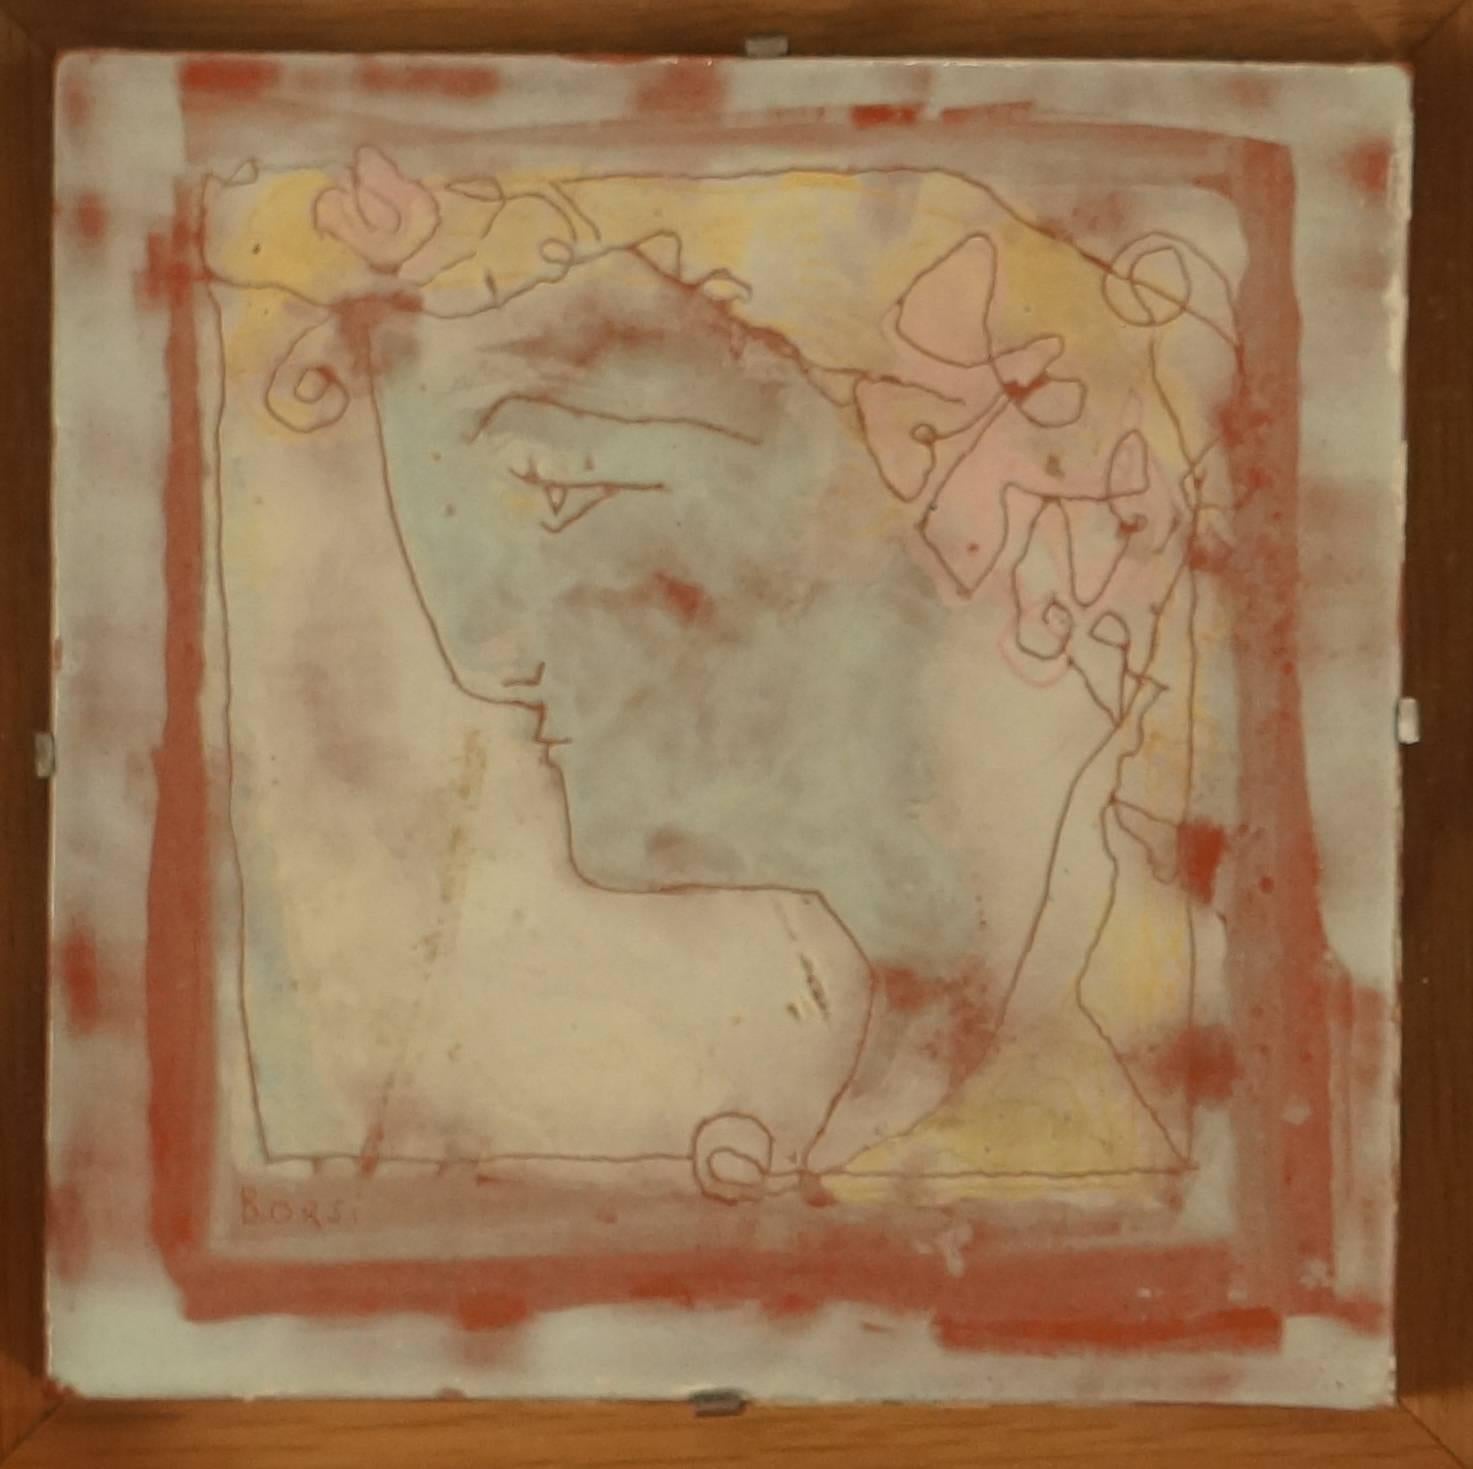 The Face, 1960 – Keramik, 35x35 cm, gerahmt (Moderne), Art, von Manfredo Borsi